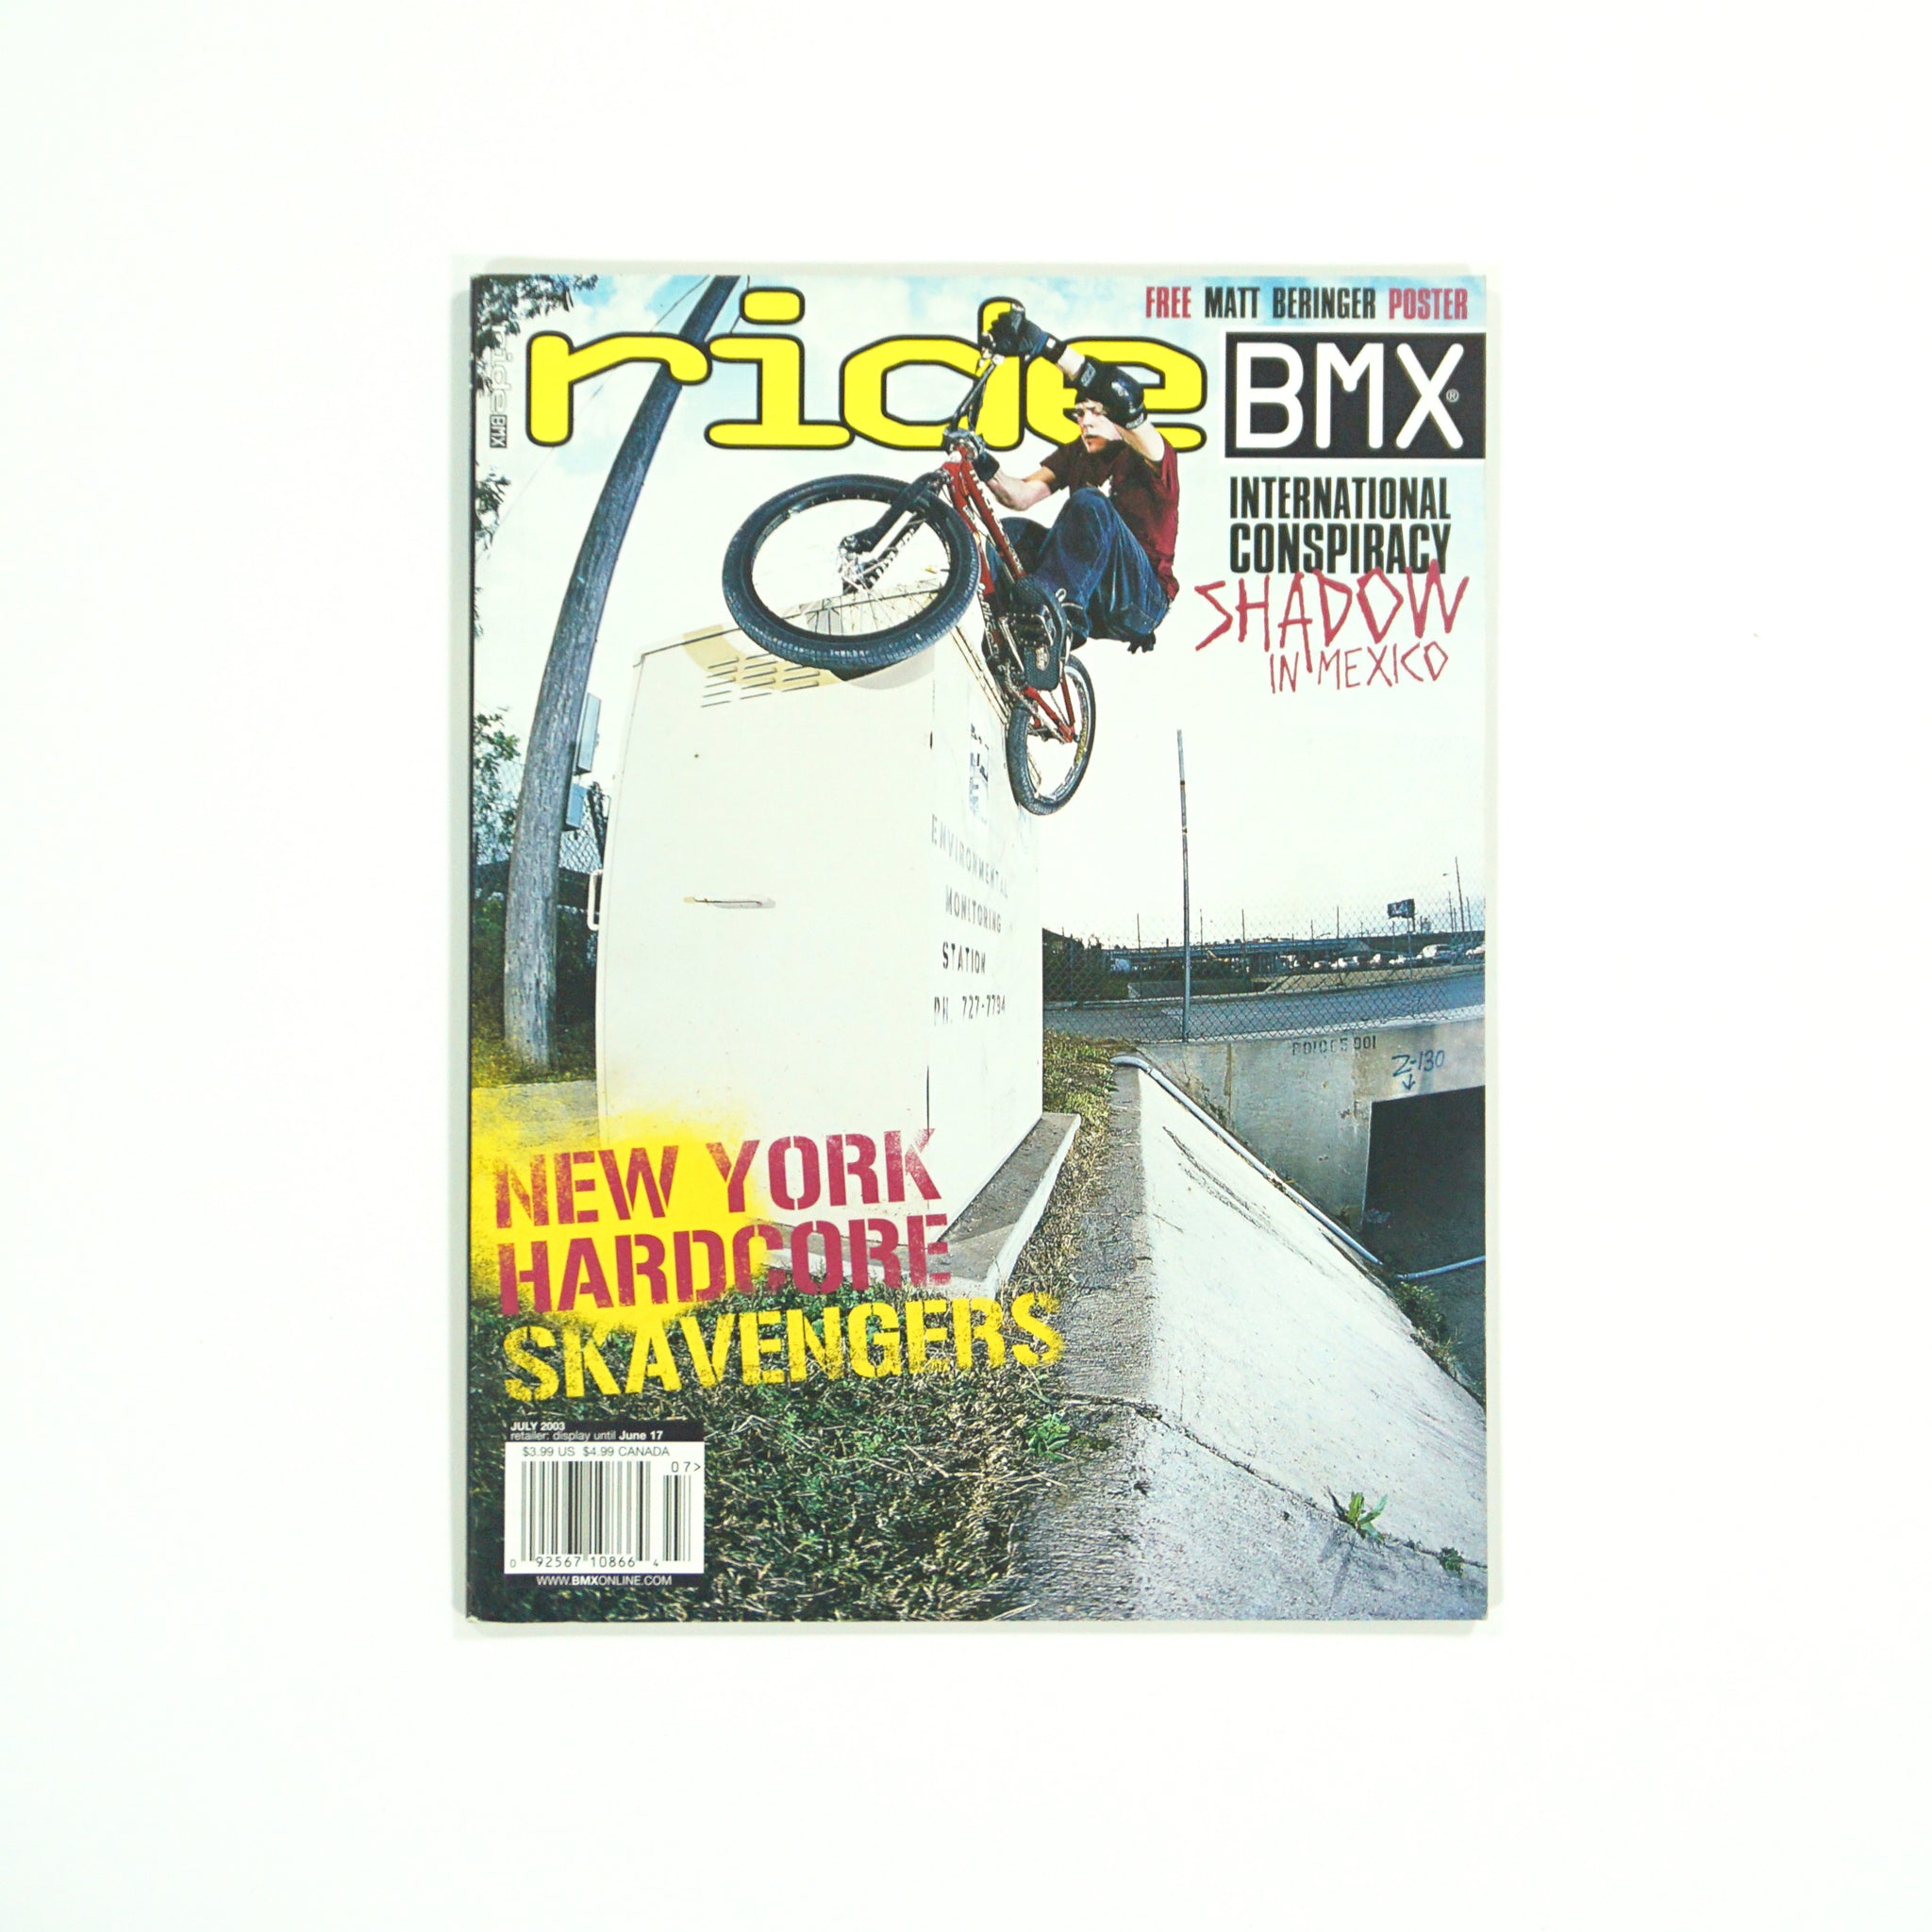 Ride BMX Magazine - July 2003 Issue